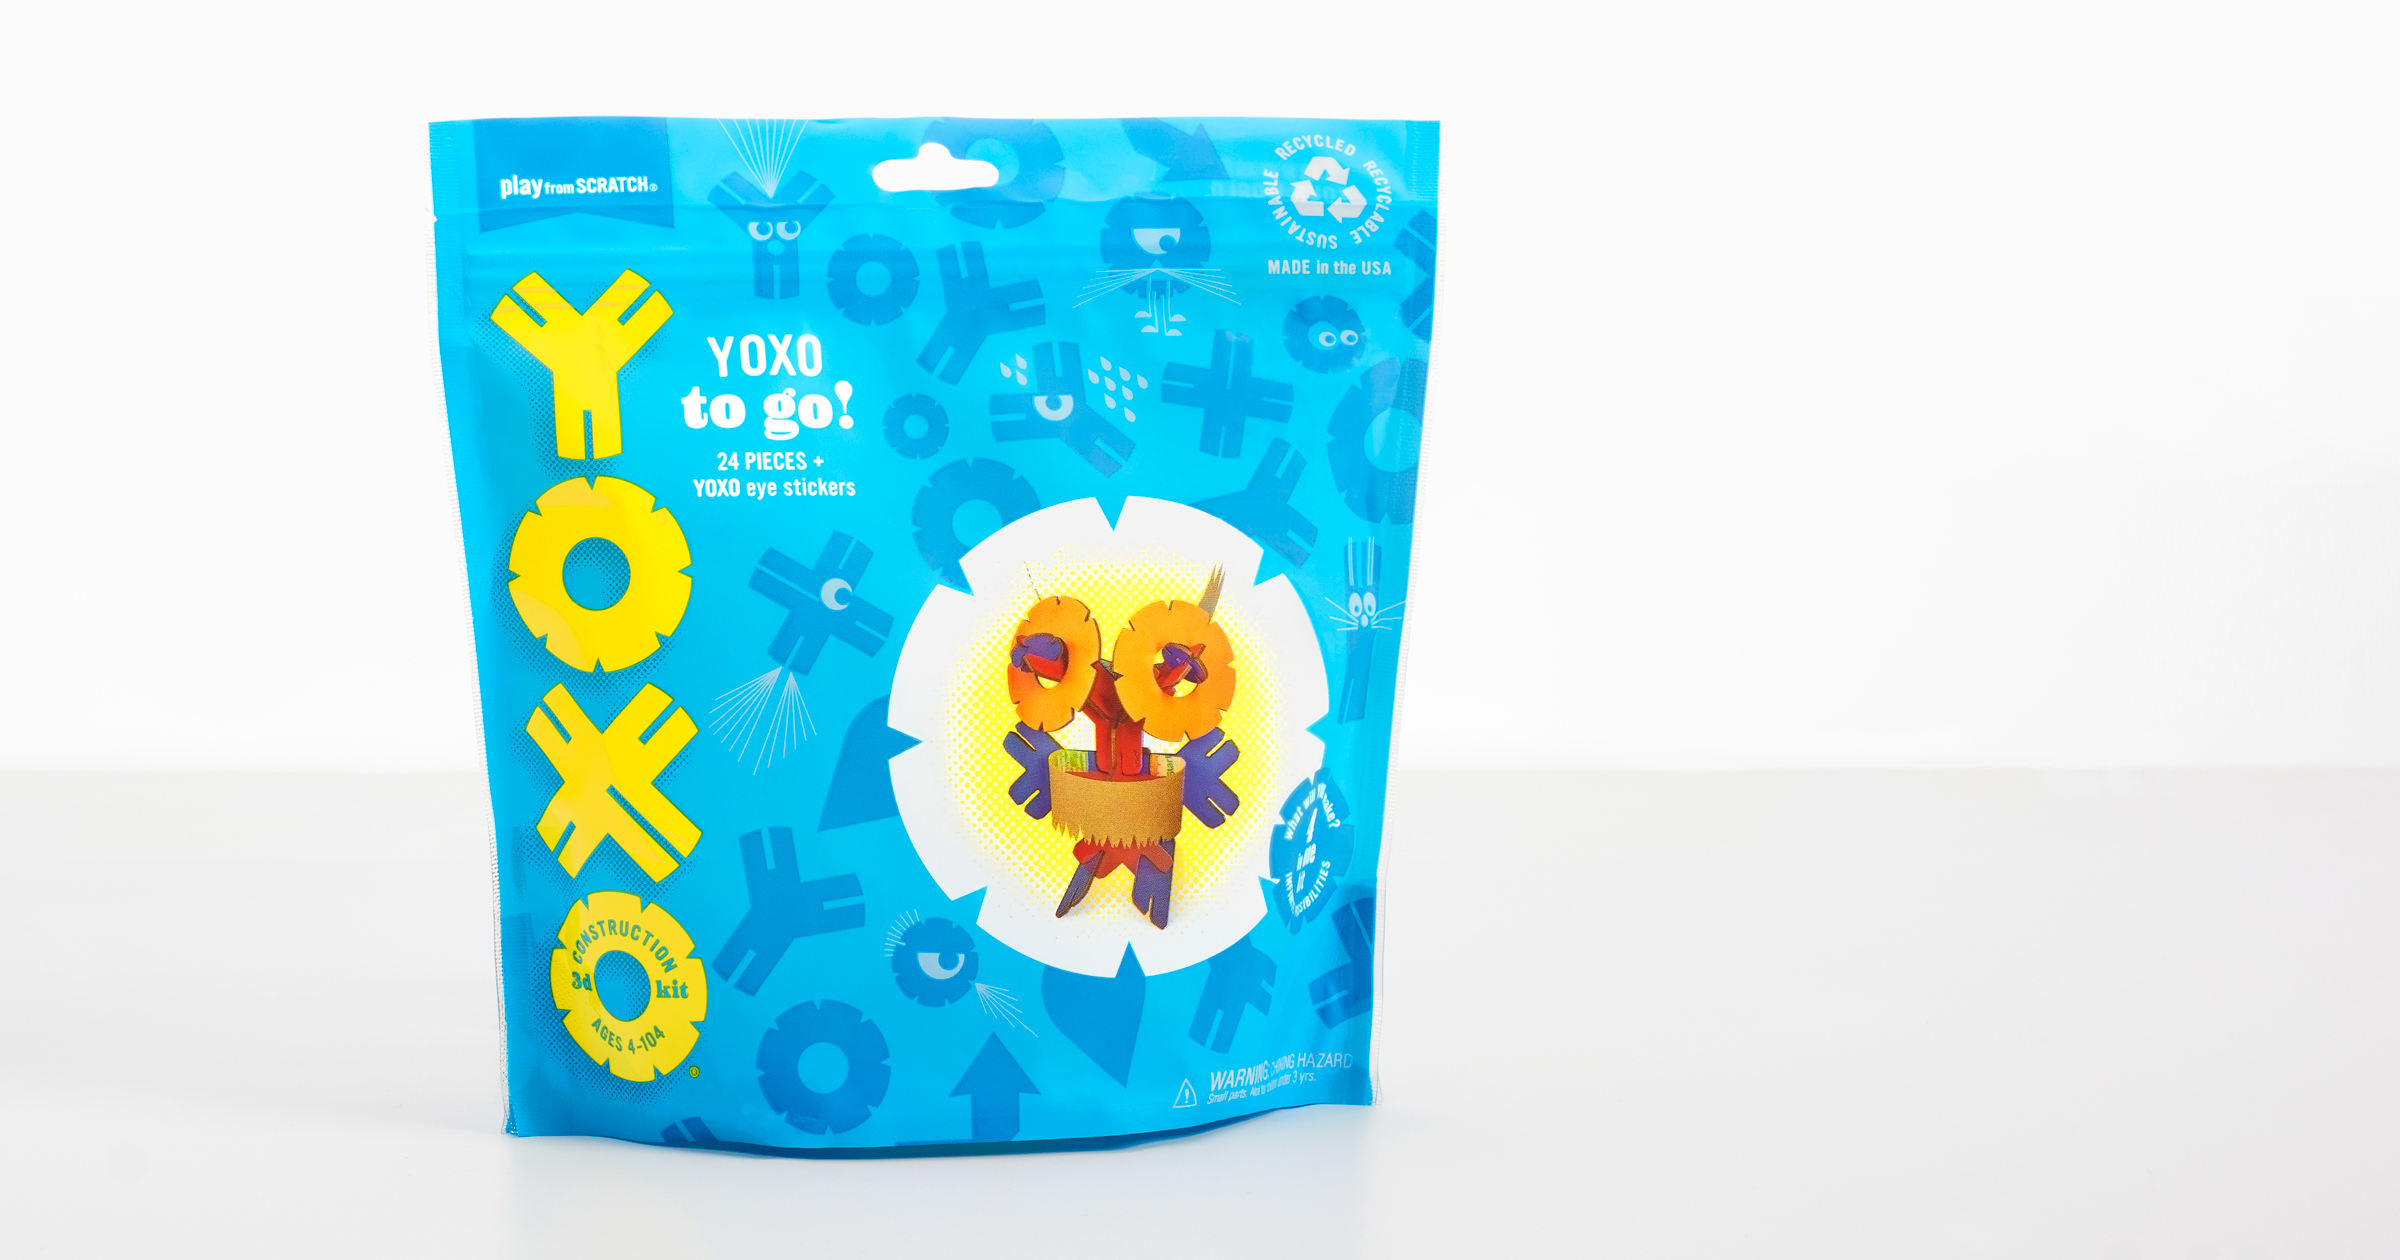 Yoxo packaging by Werner Design Werks